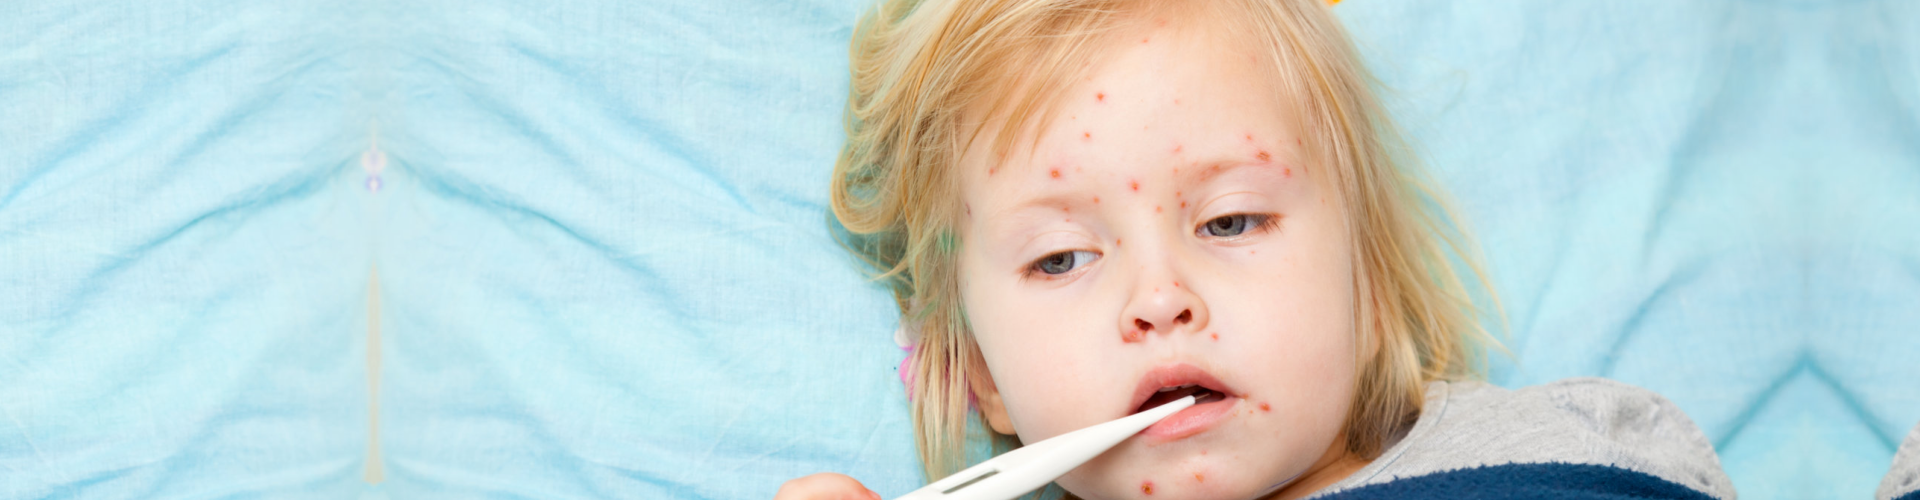 little girl suffering from measles